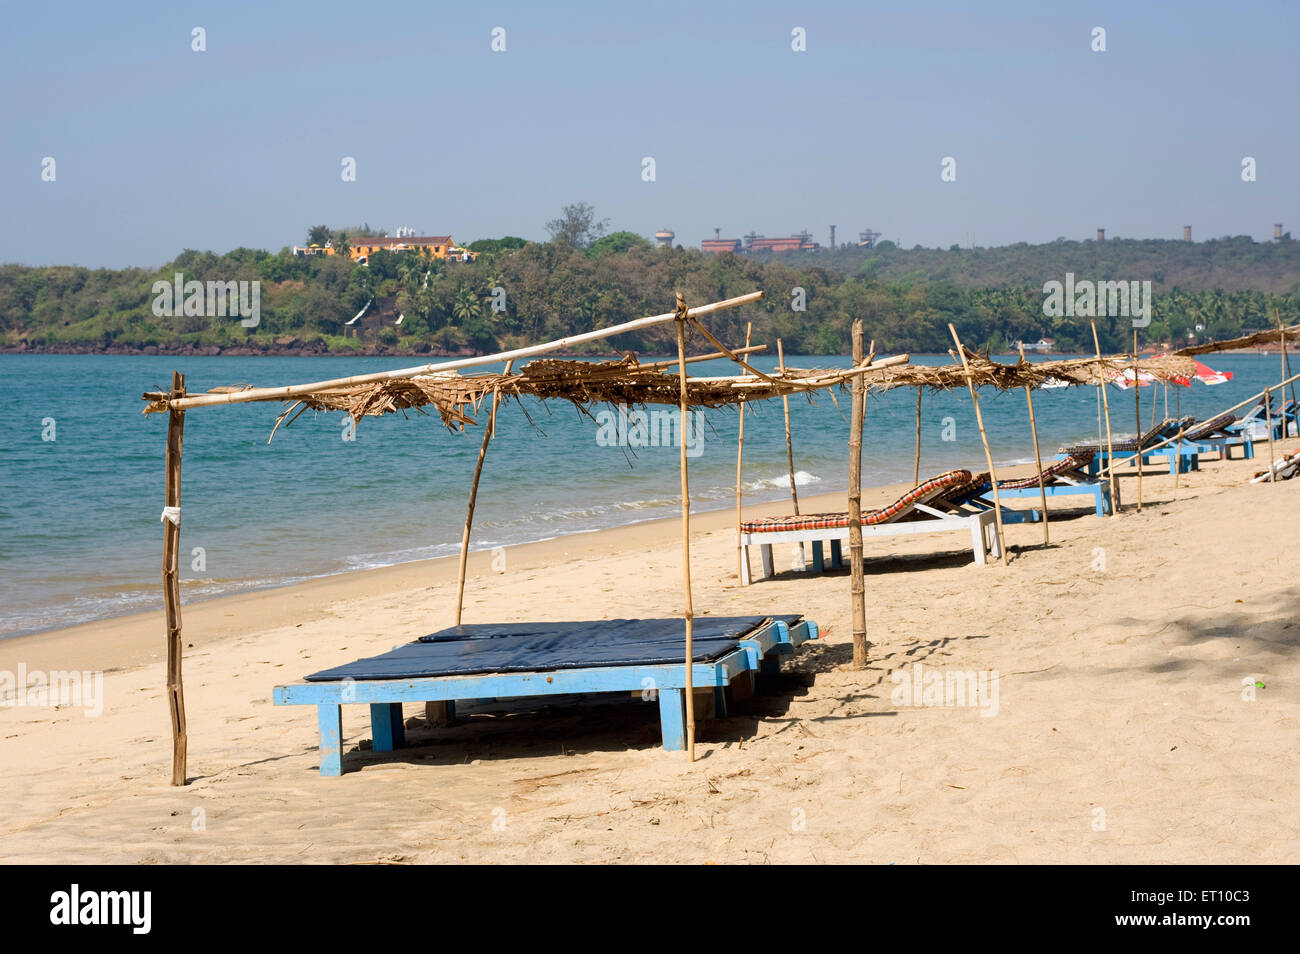 Wooden beds on sand at keri beach in pernem Canacona Goa India - nmk 177250 Stock Photo